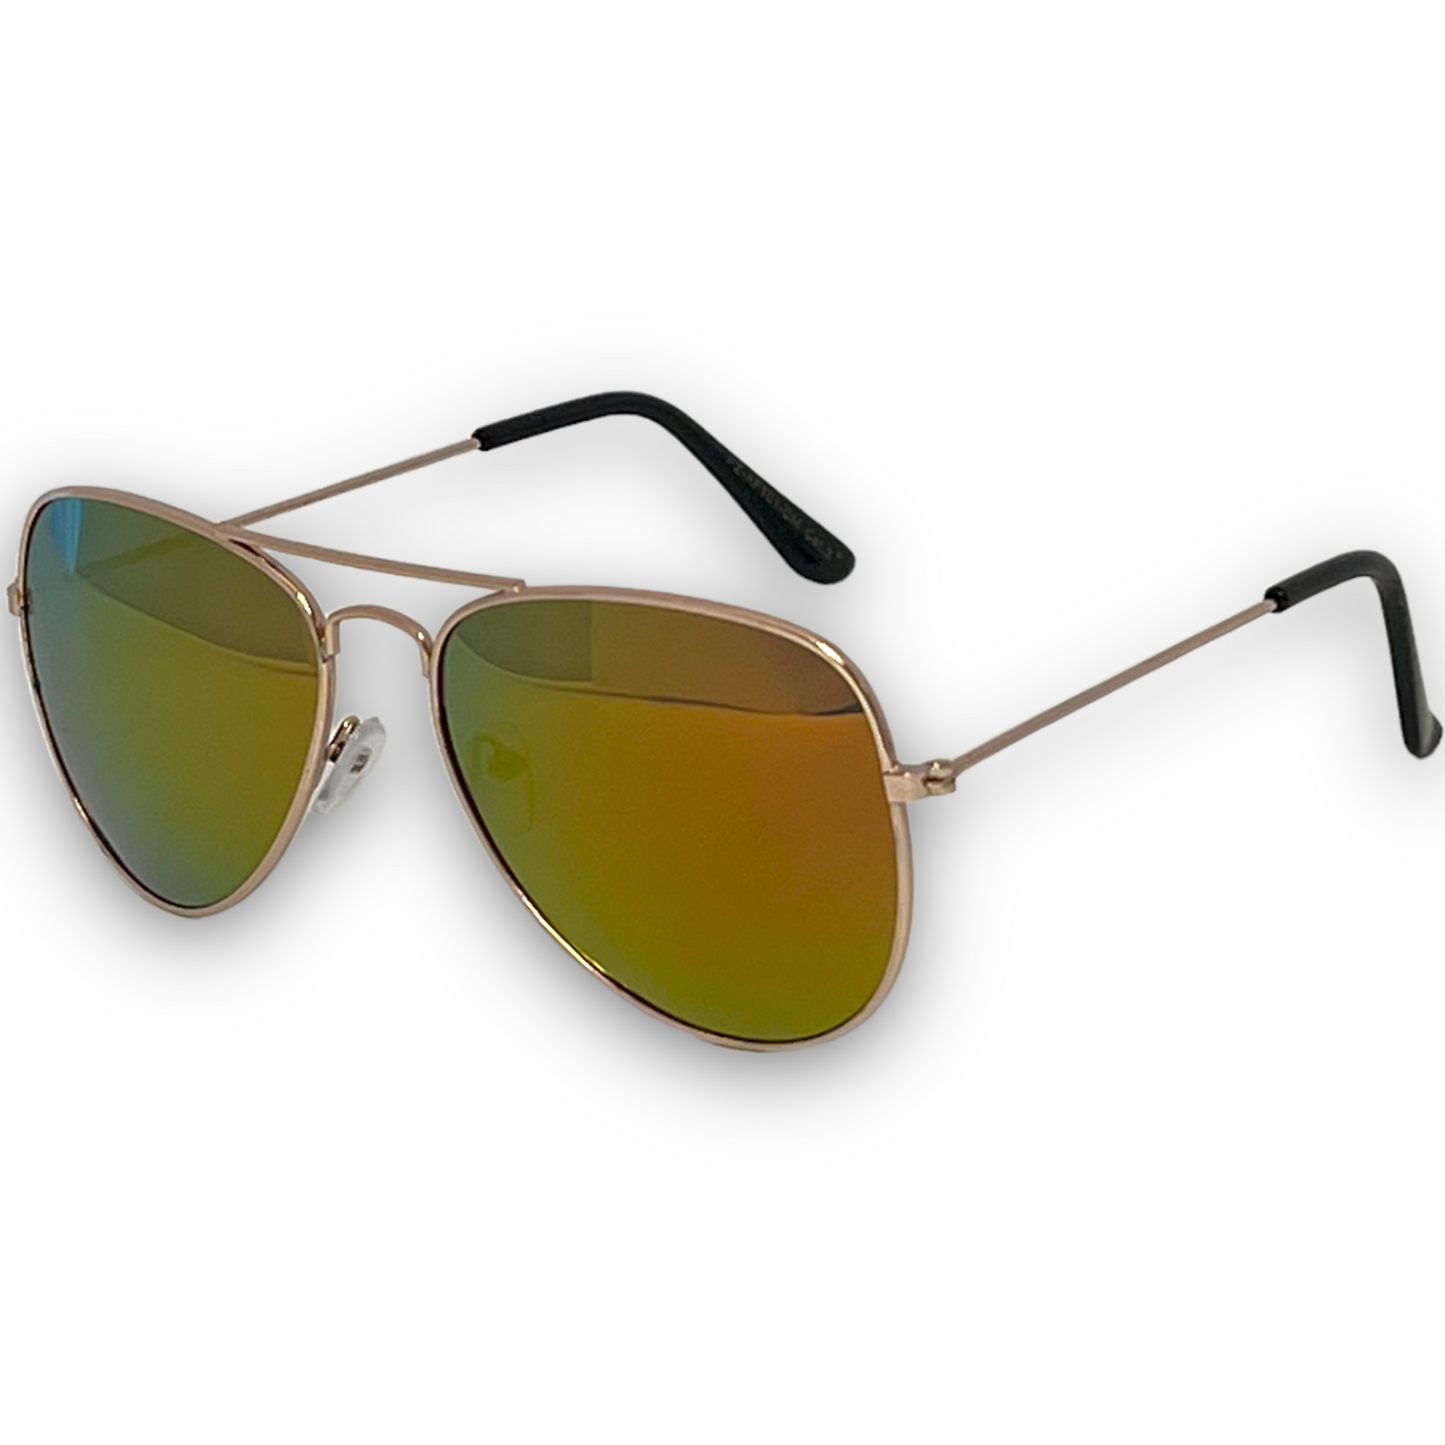 Retro Polarized Pilot Sunglasses for Men and Women Air Force PhotoRoom_20230126_121321